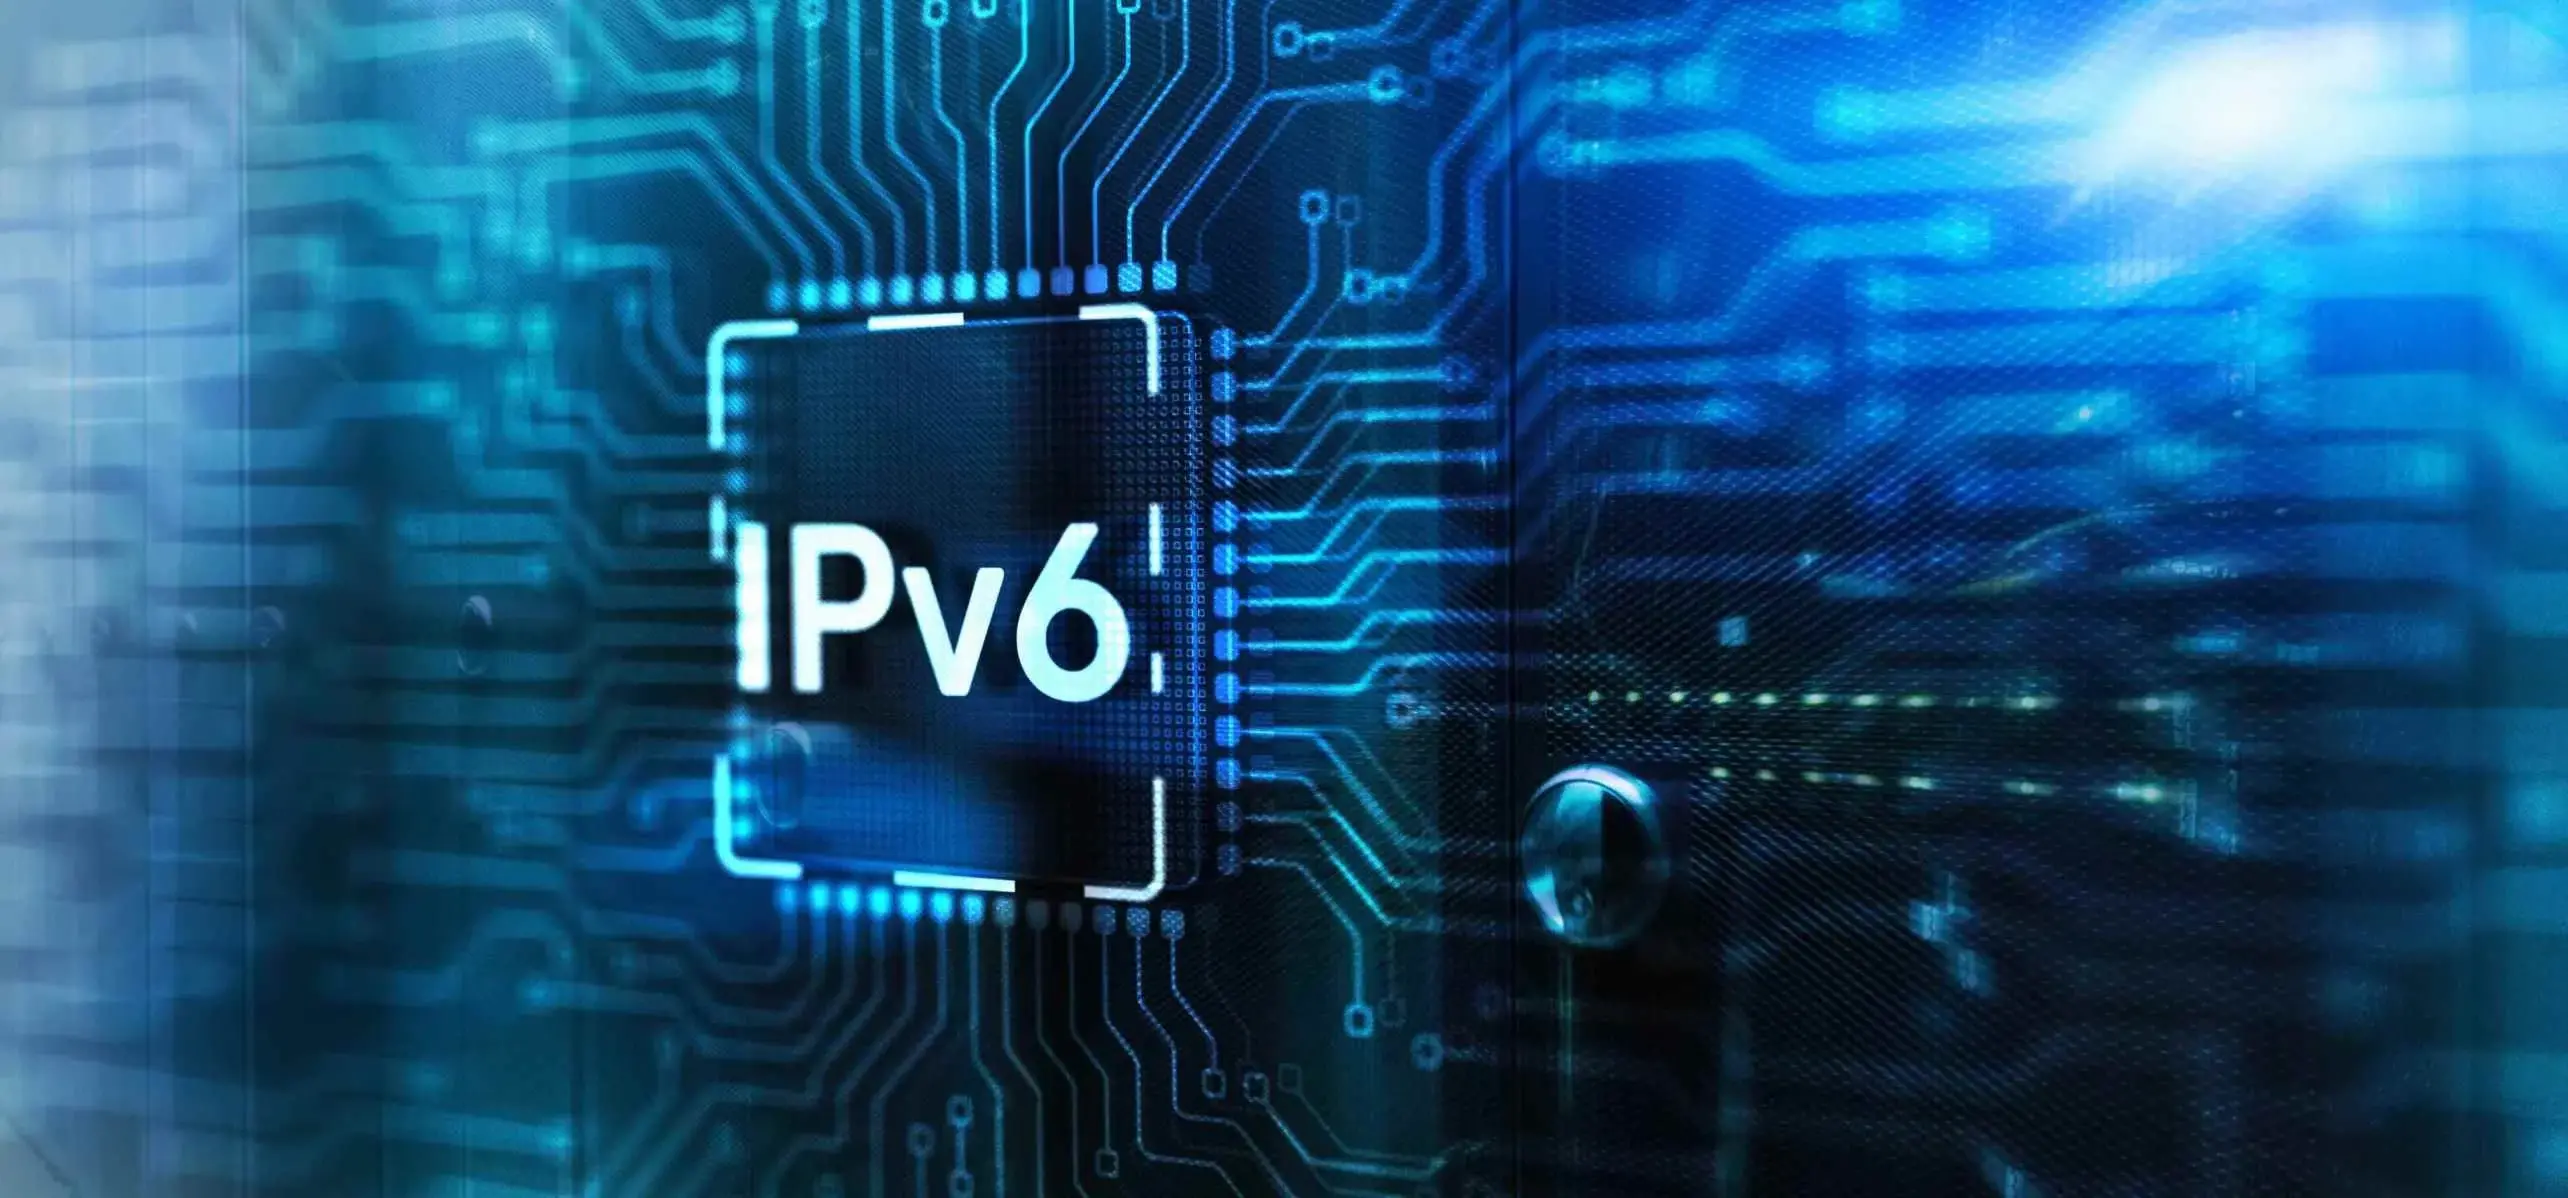 IPv6 Deployment